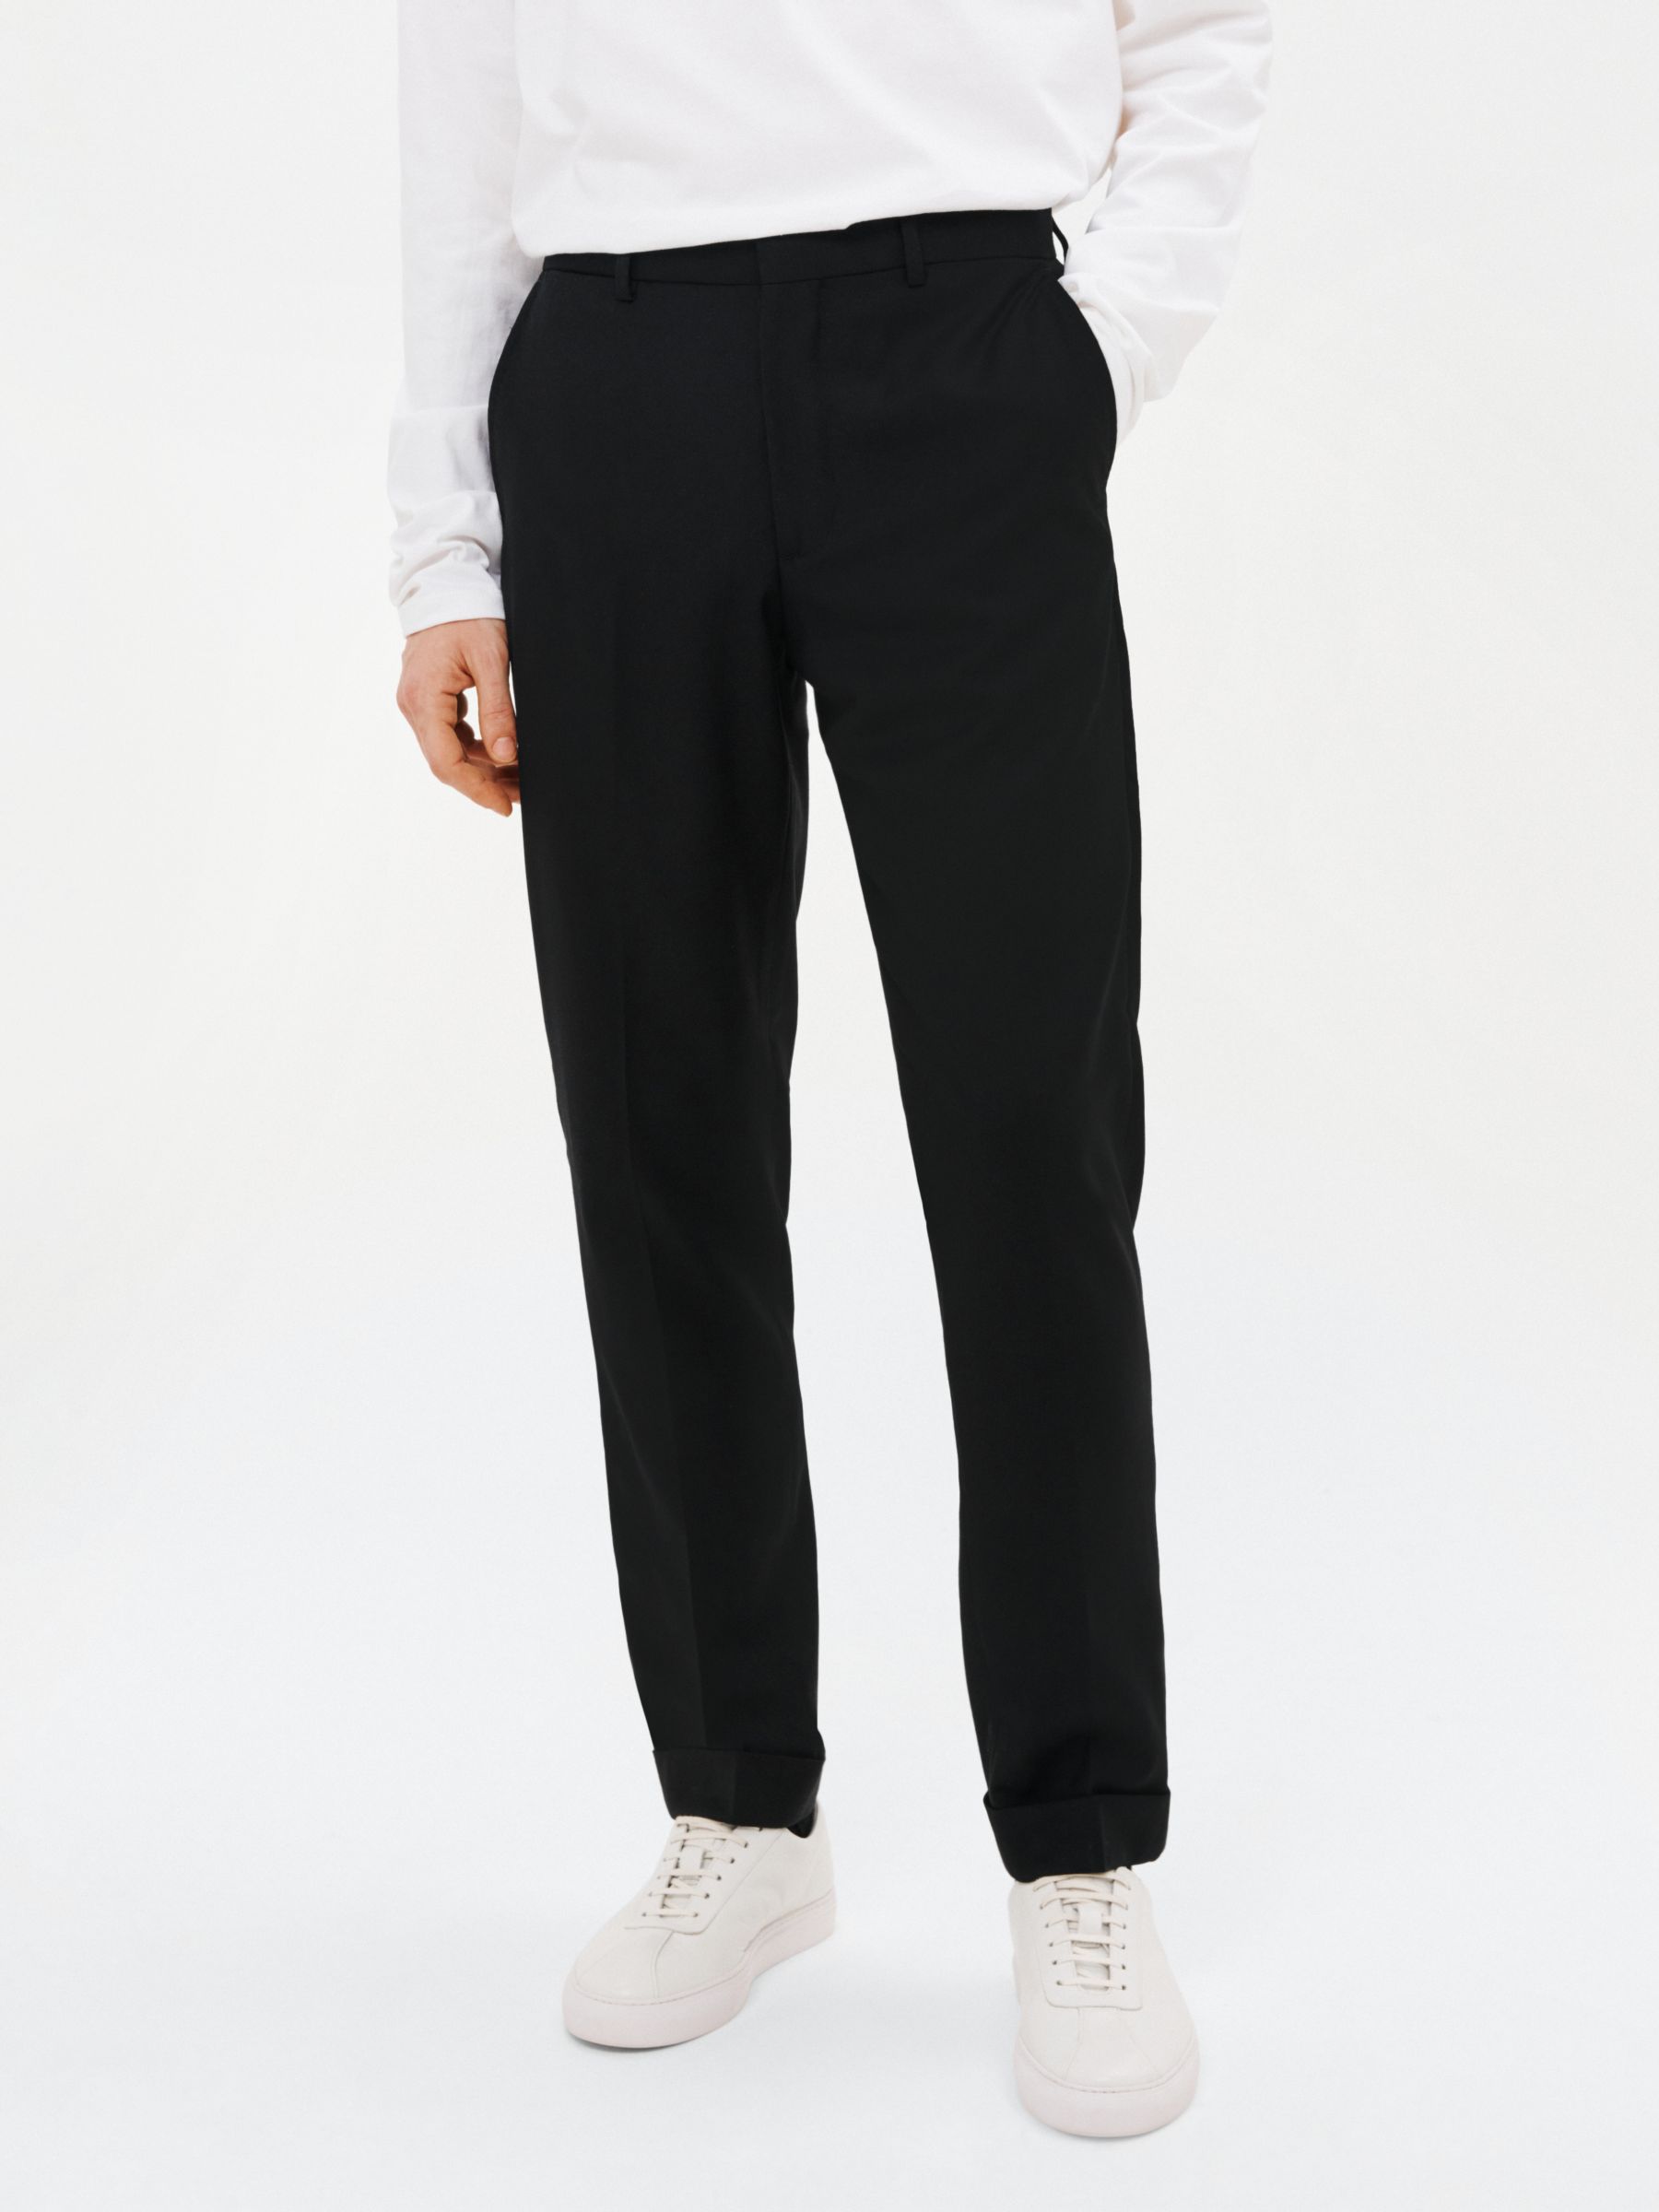 Polo Ralph Lauren Trousers - Buy Polo Ralph Lauren Trousers online